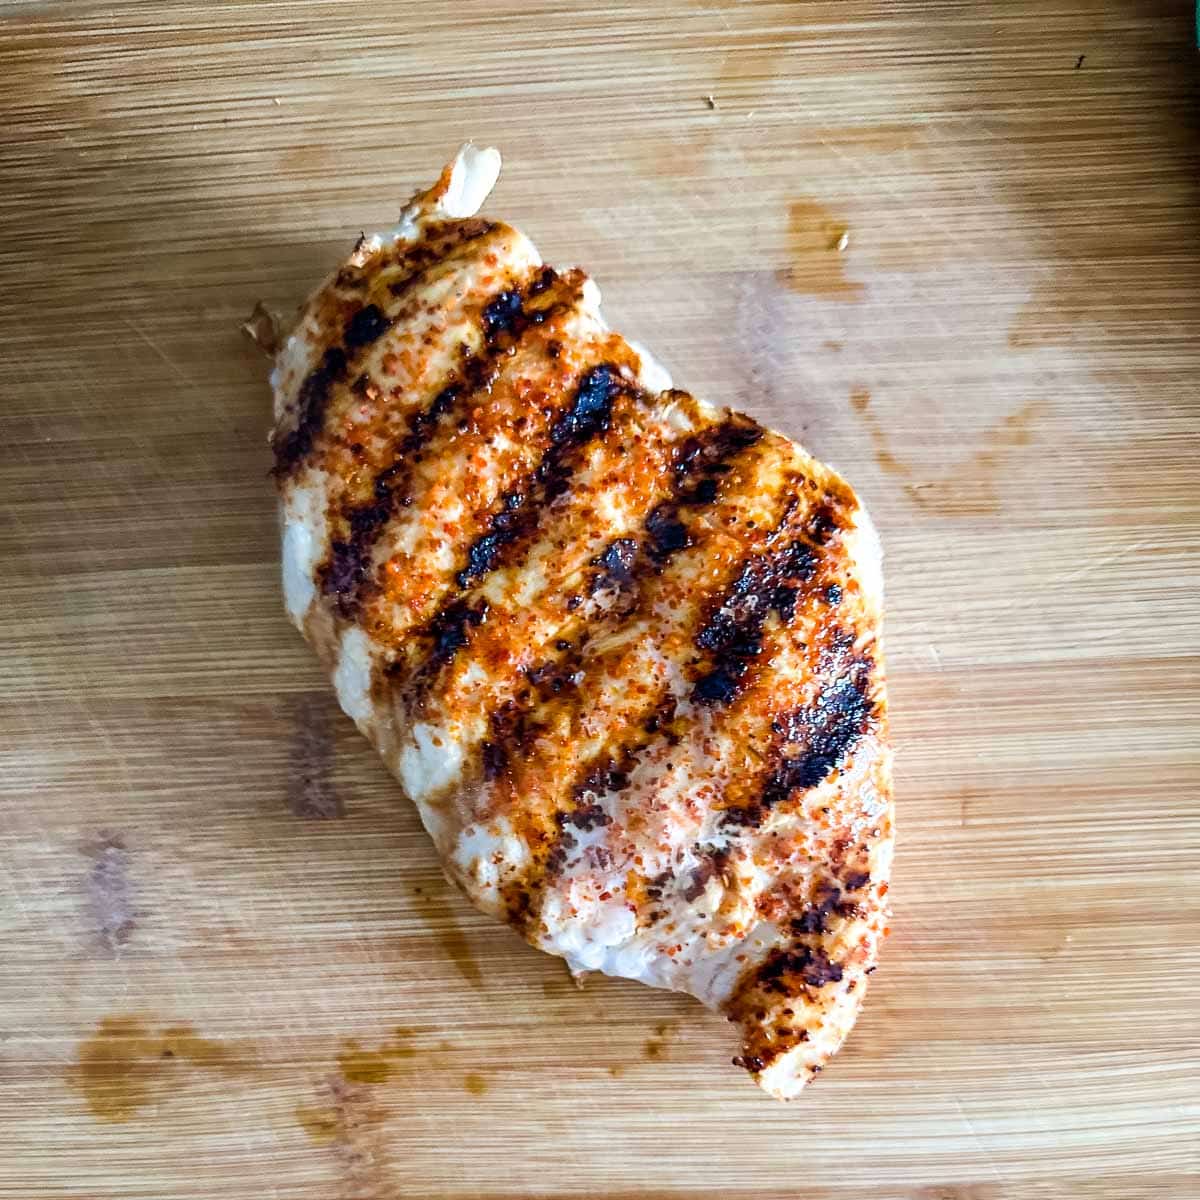 A Tajín Grilled Chicken breast sits on a wooden cutting board.